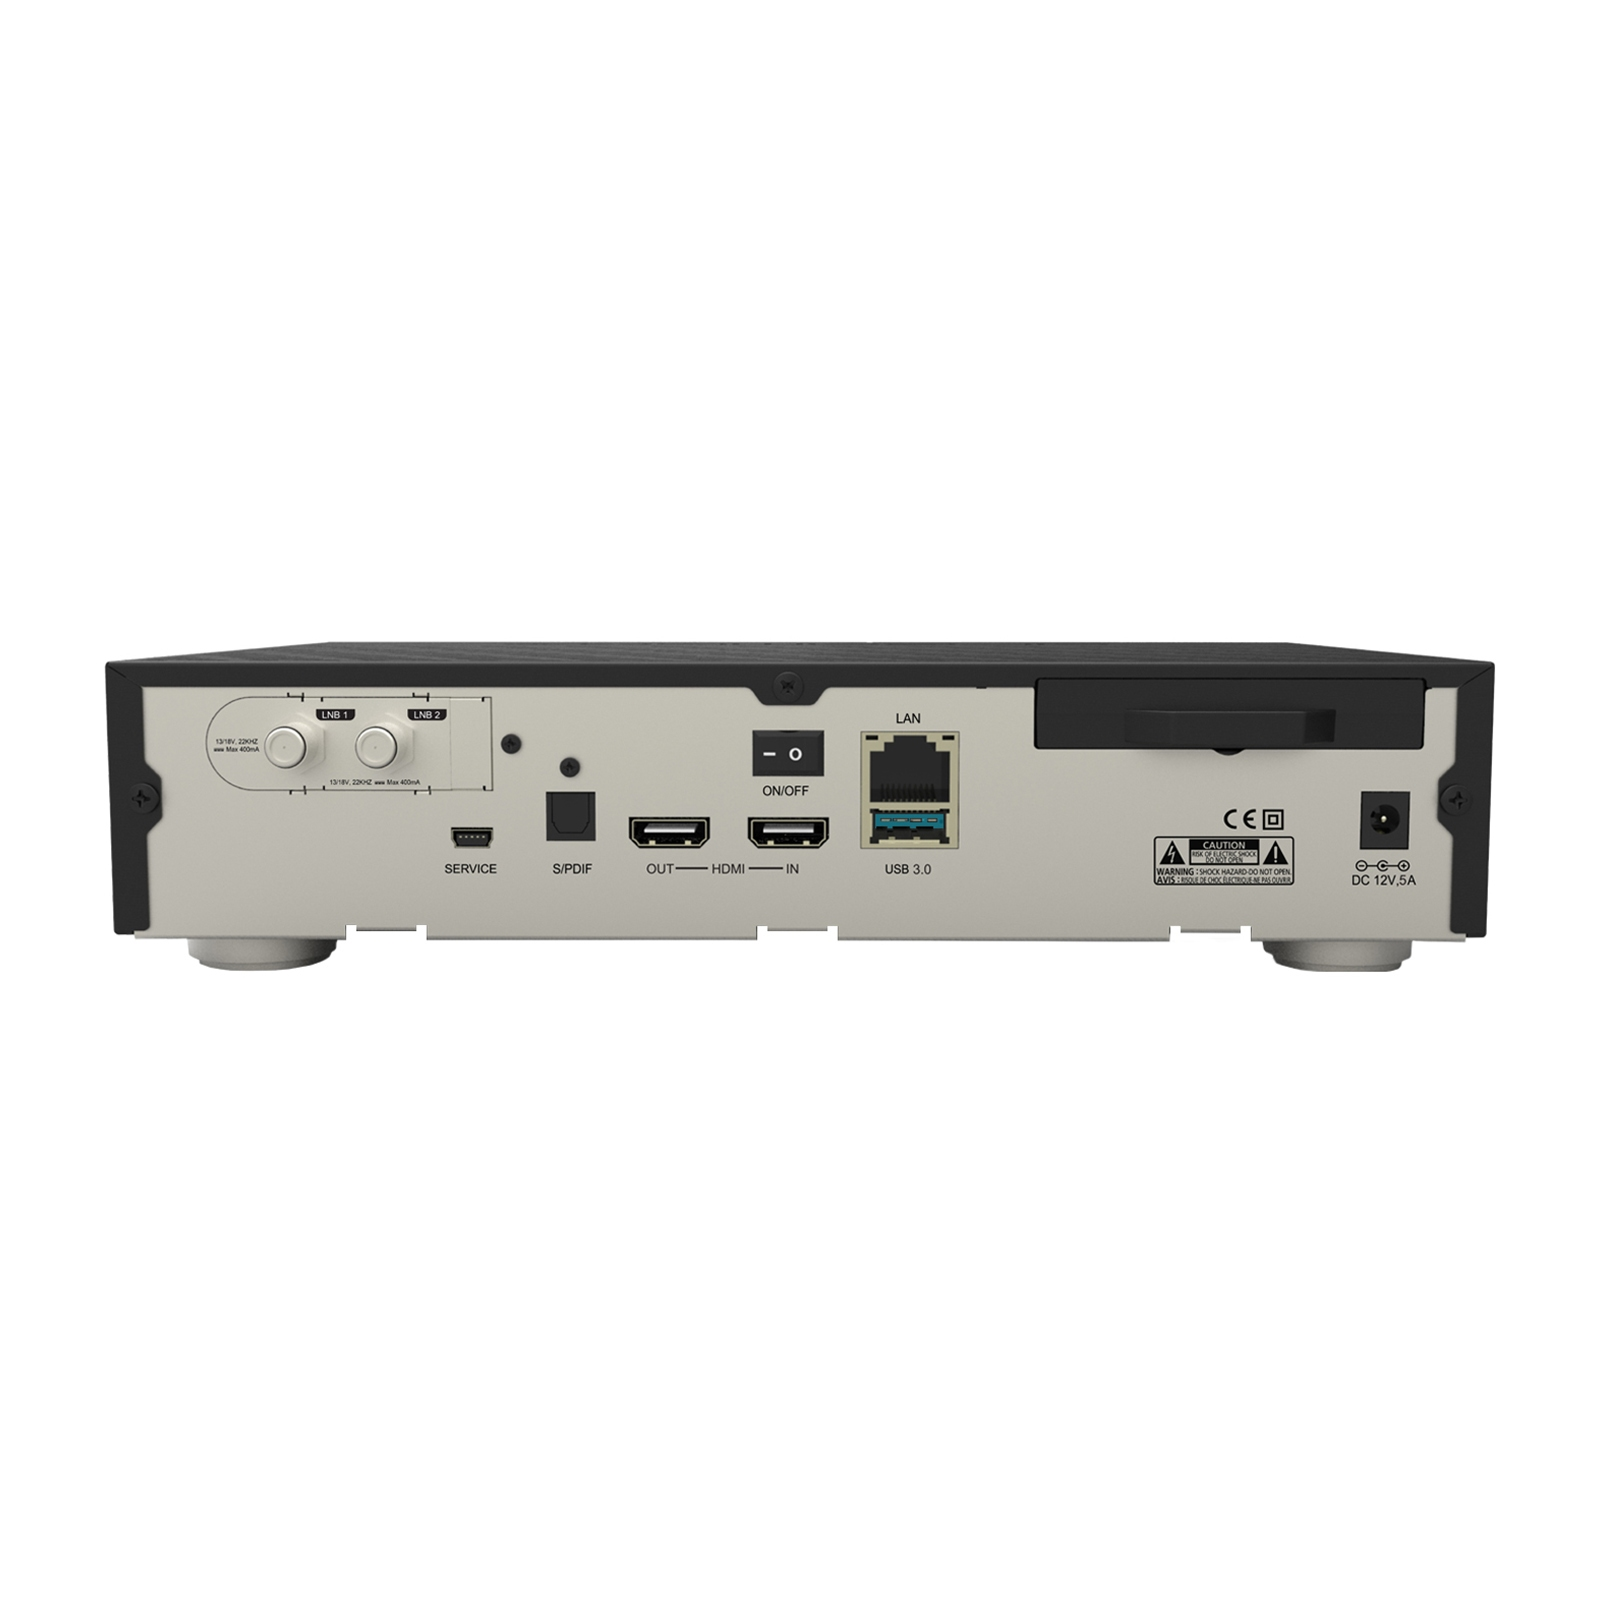 1xDVB-S2X MS (PVR-Funktion, Twin DREAM 500GB Schwarz) DM900 RC20 Tuner, Sat-Receiver MULTIMEDIA